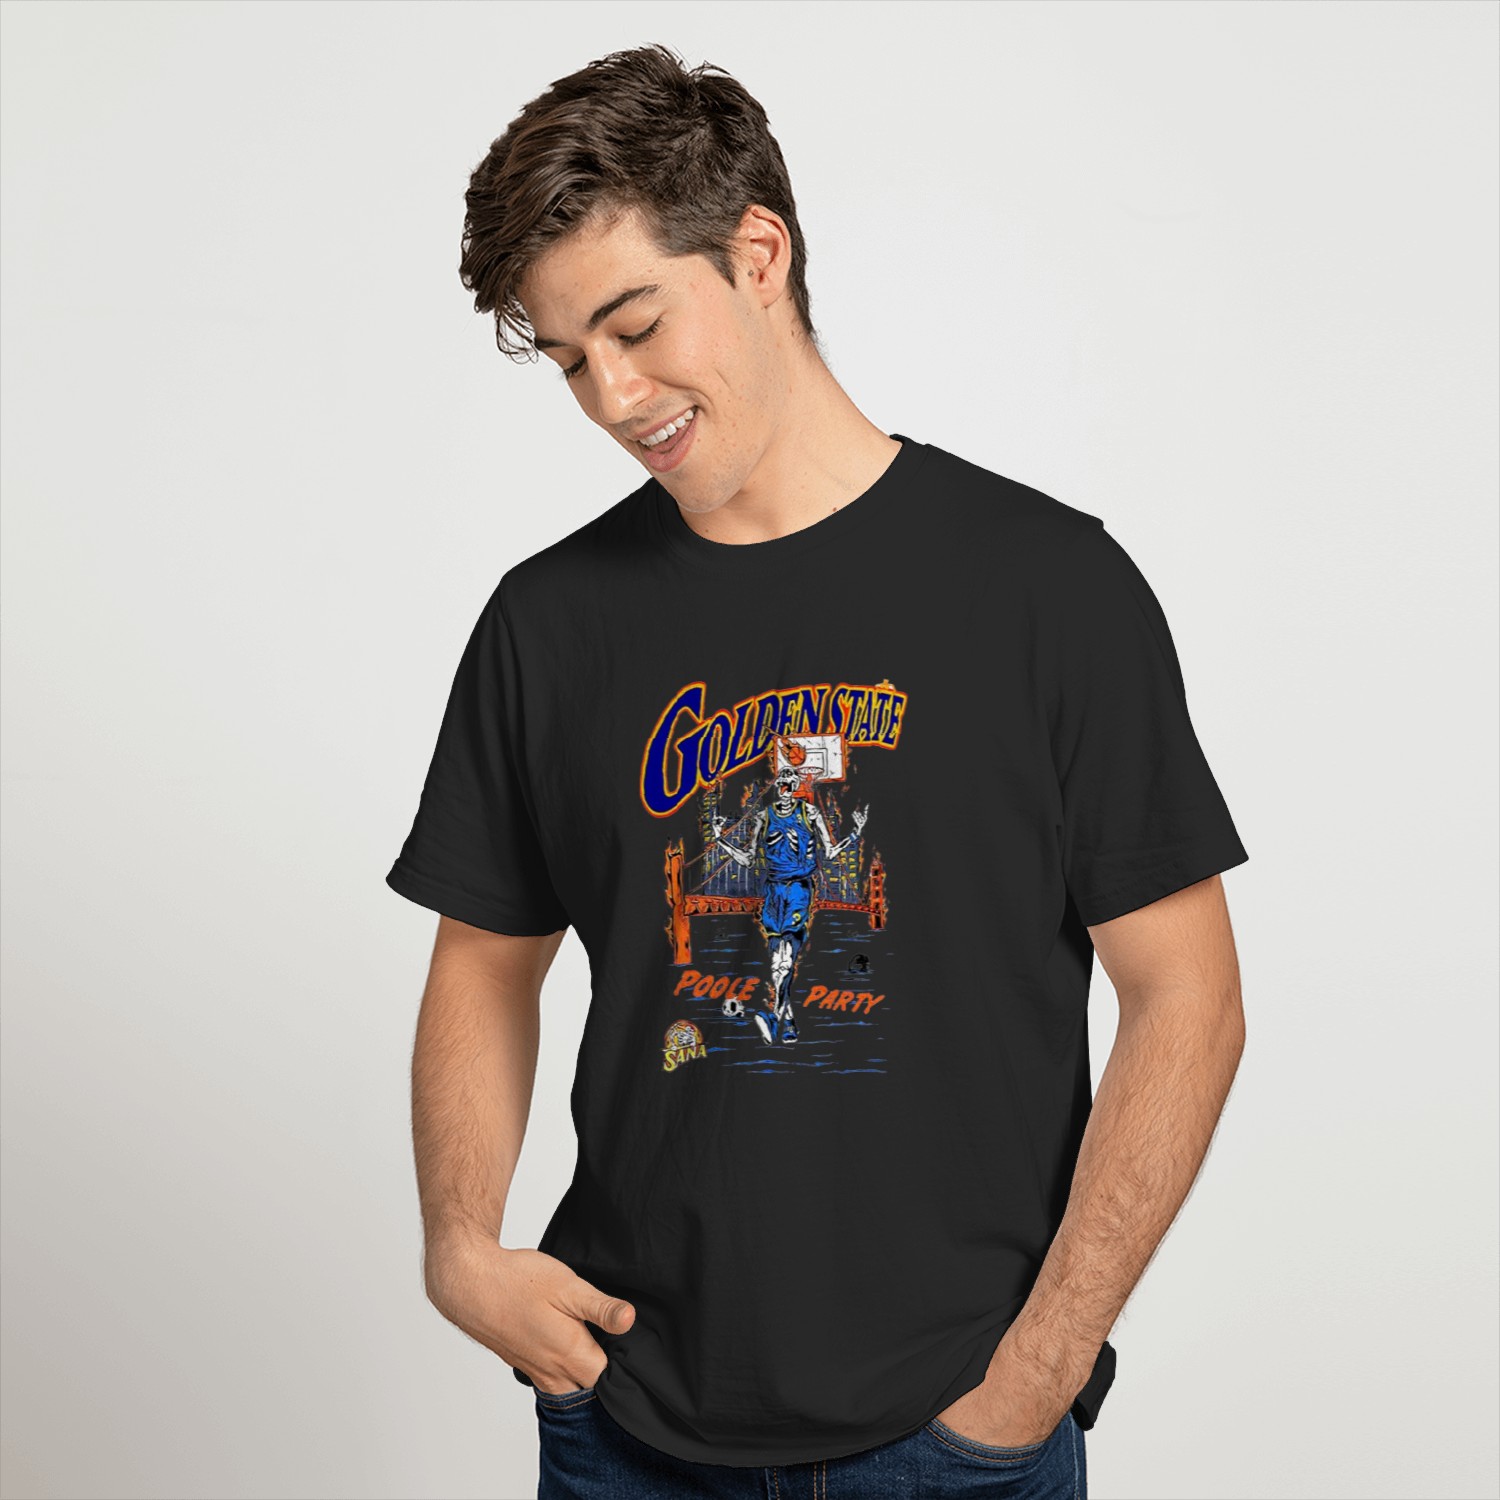 Jordan Poole Vintage 90s Style Warriors T-Shirt